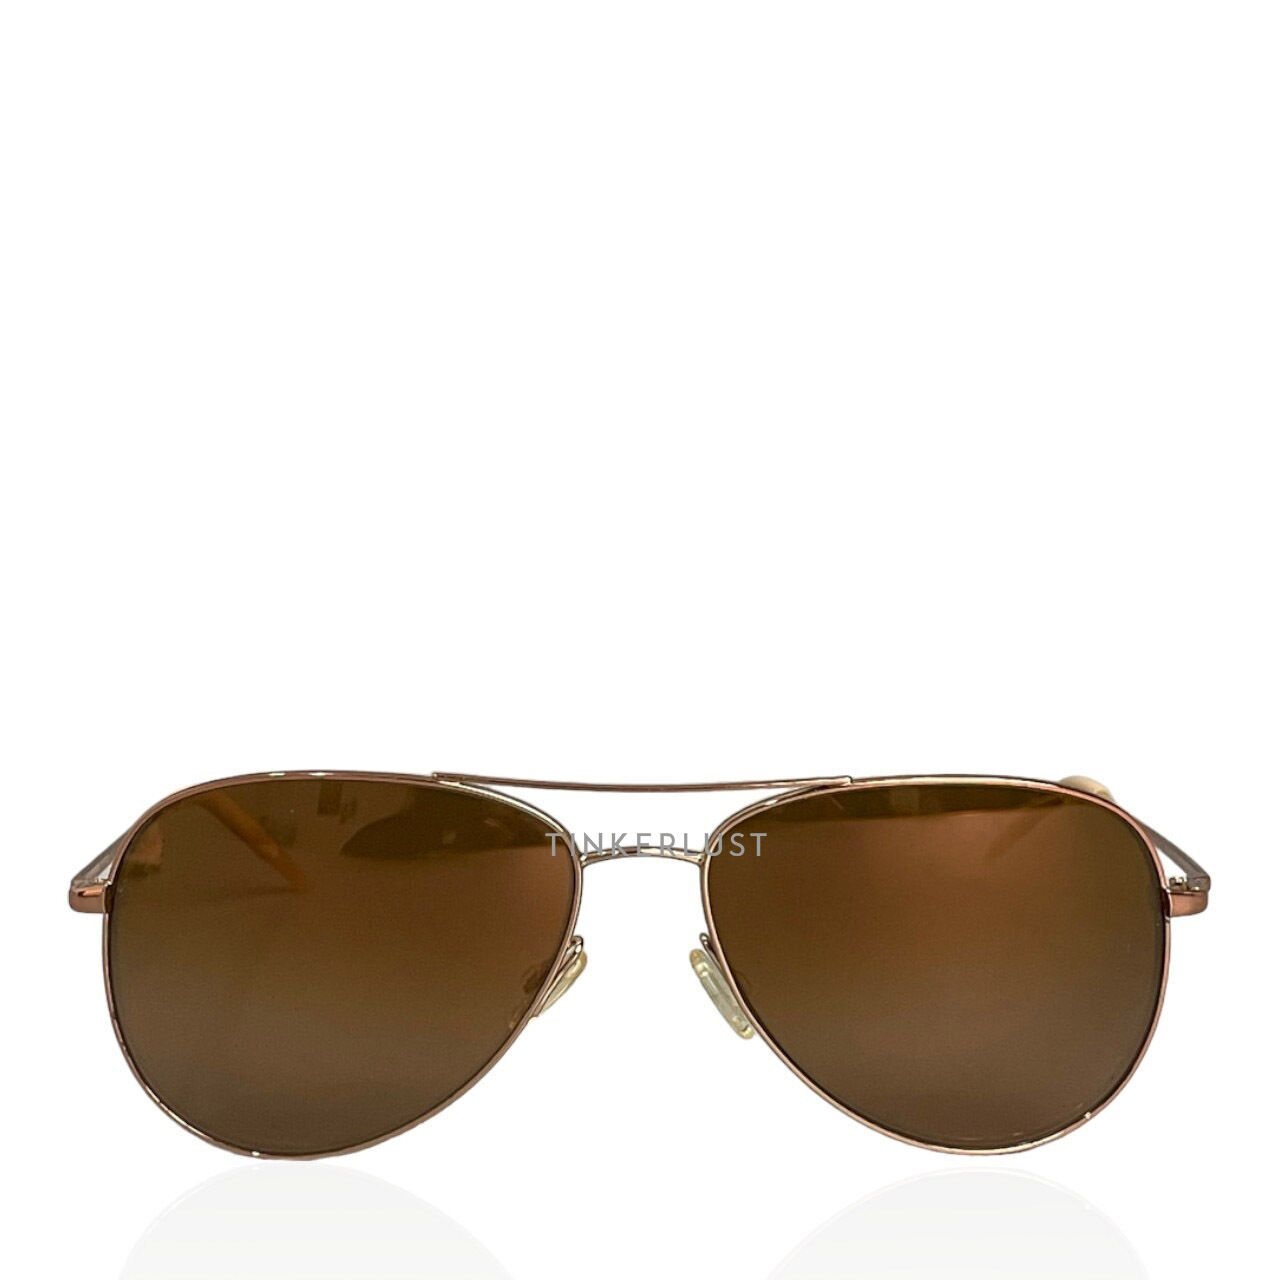 Oliver Peoples Rose Gold Sunglasses